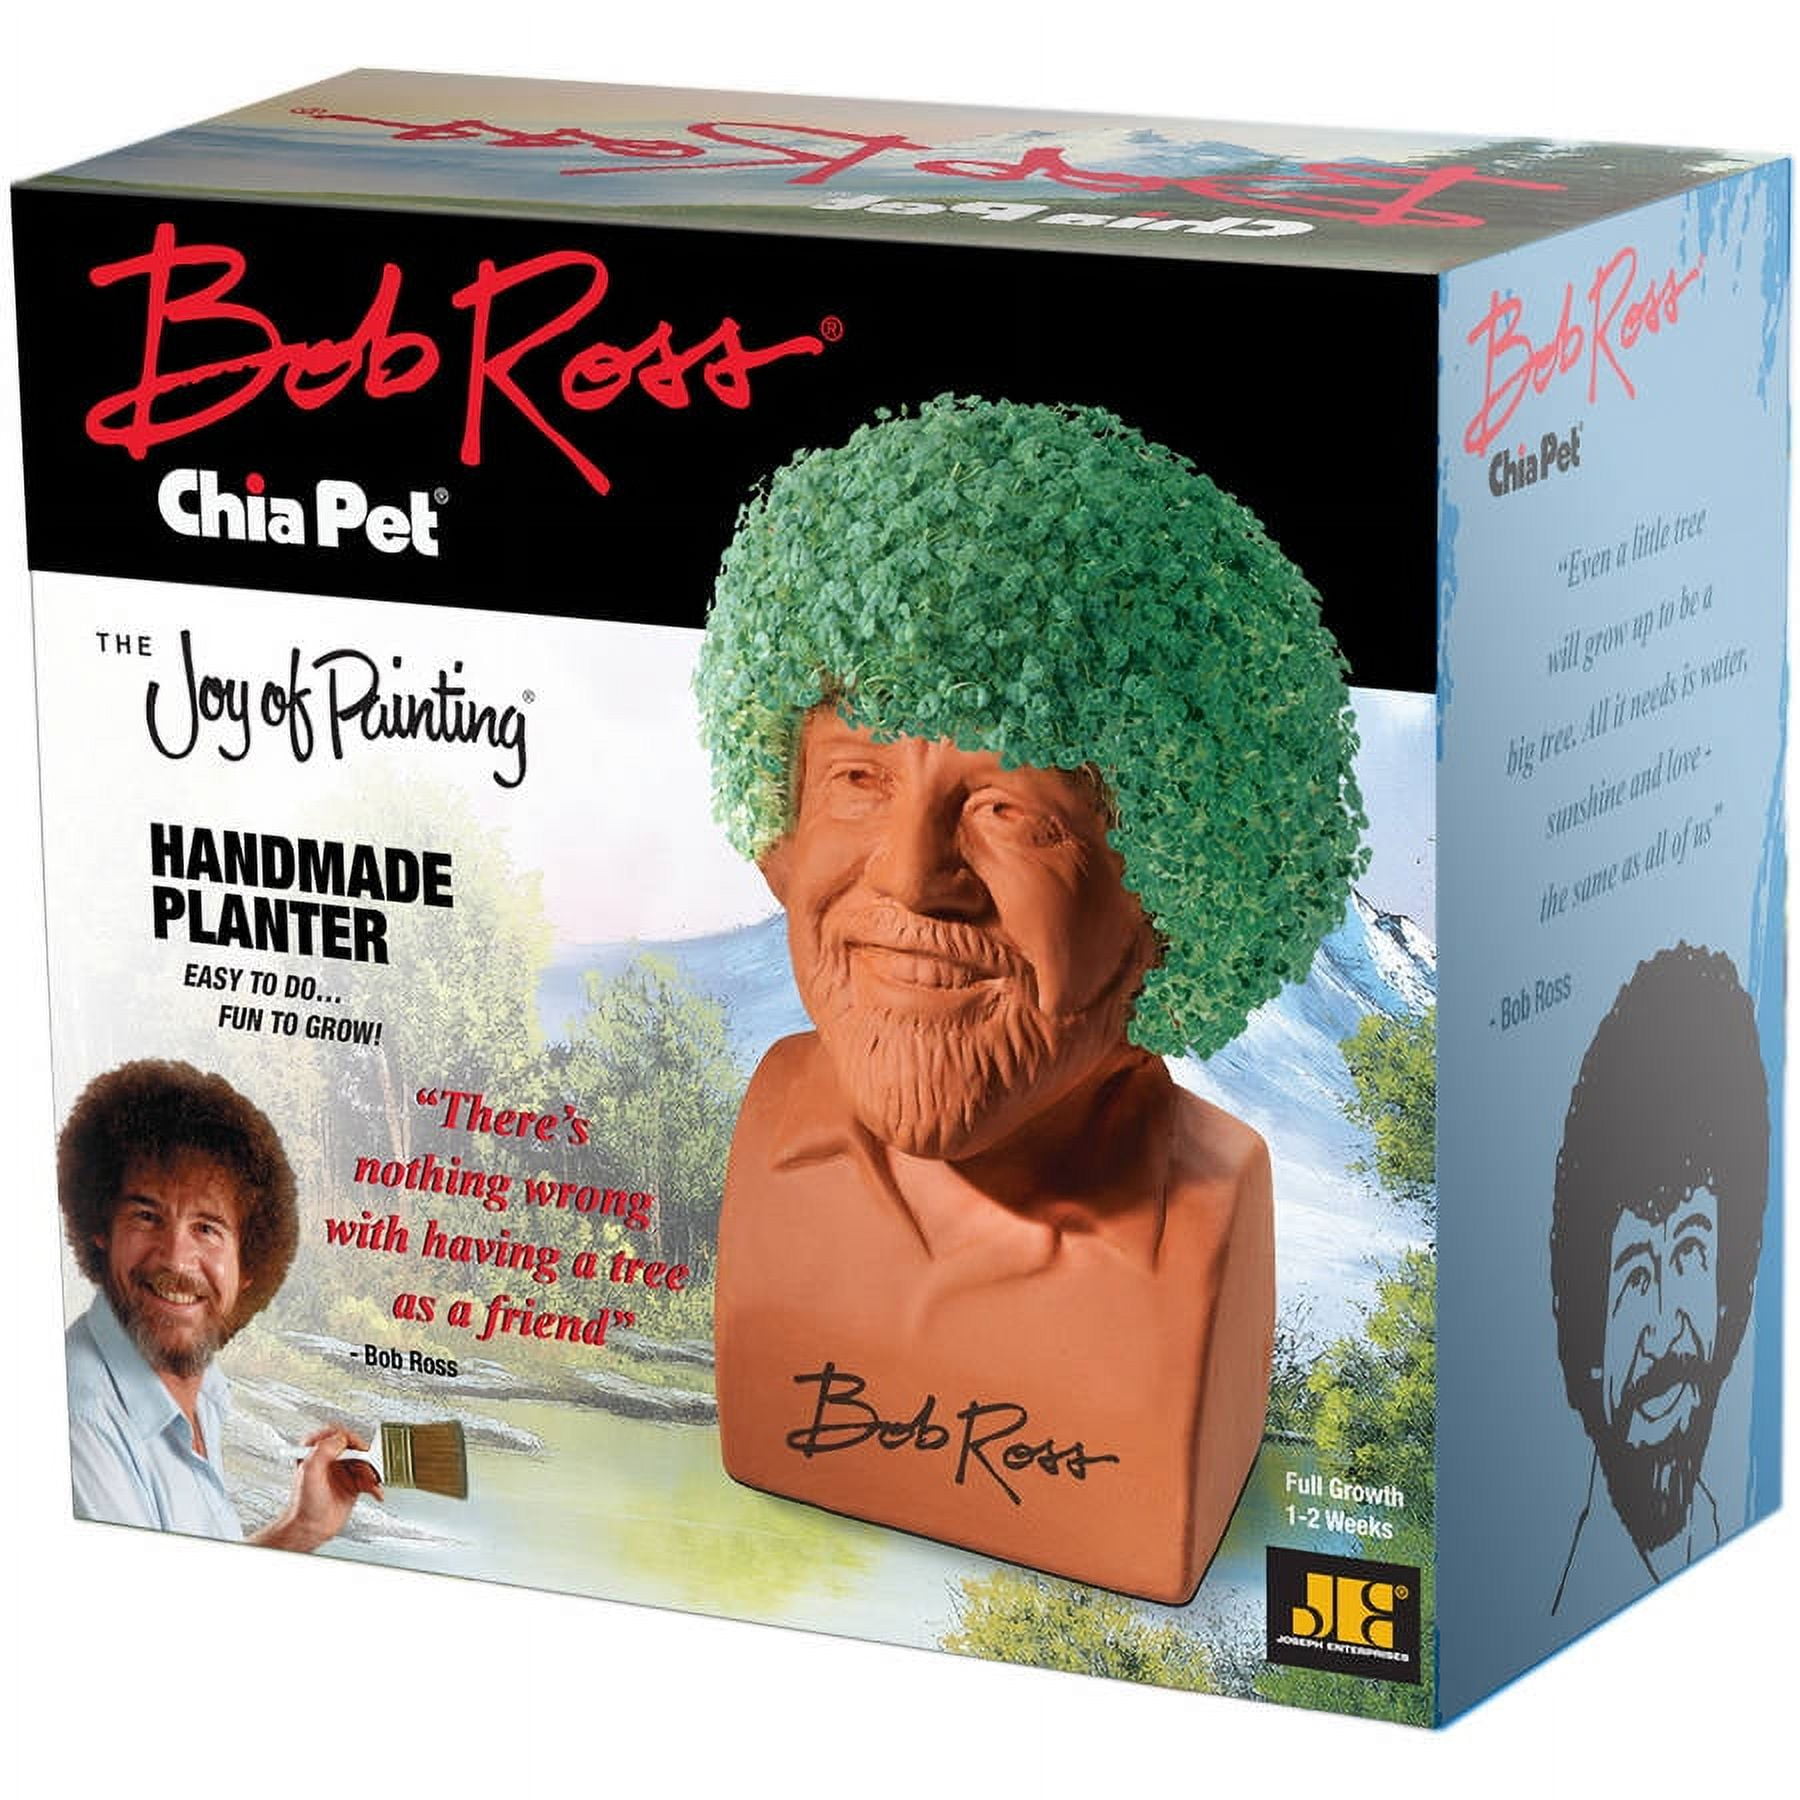 Bob Ross The Joy of Painting Chia Pet Handmade Planter New open box  21363004931